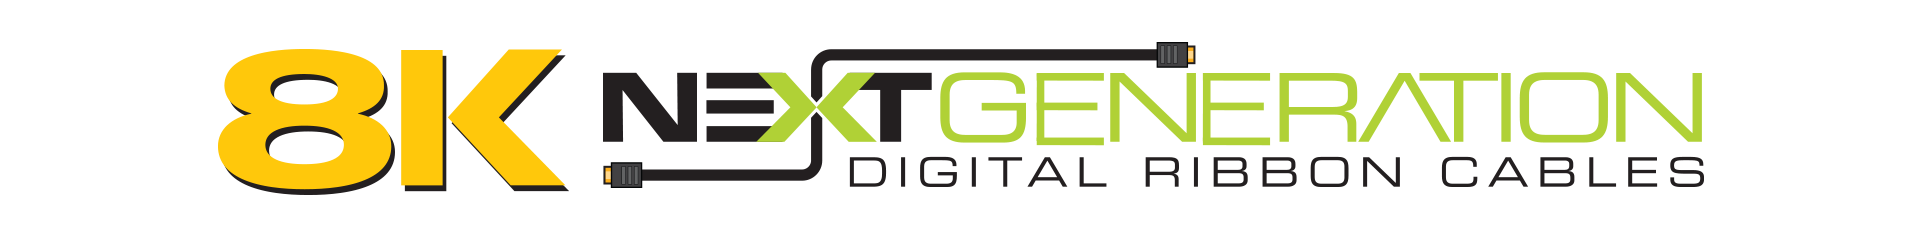 Next Generation Digital Ribbon Cable logo